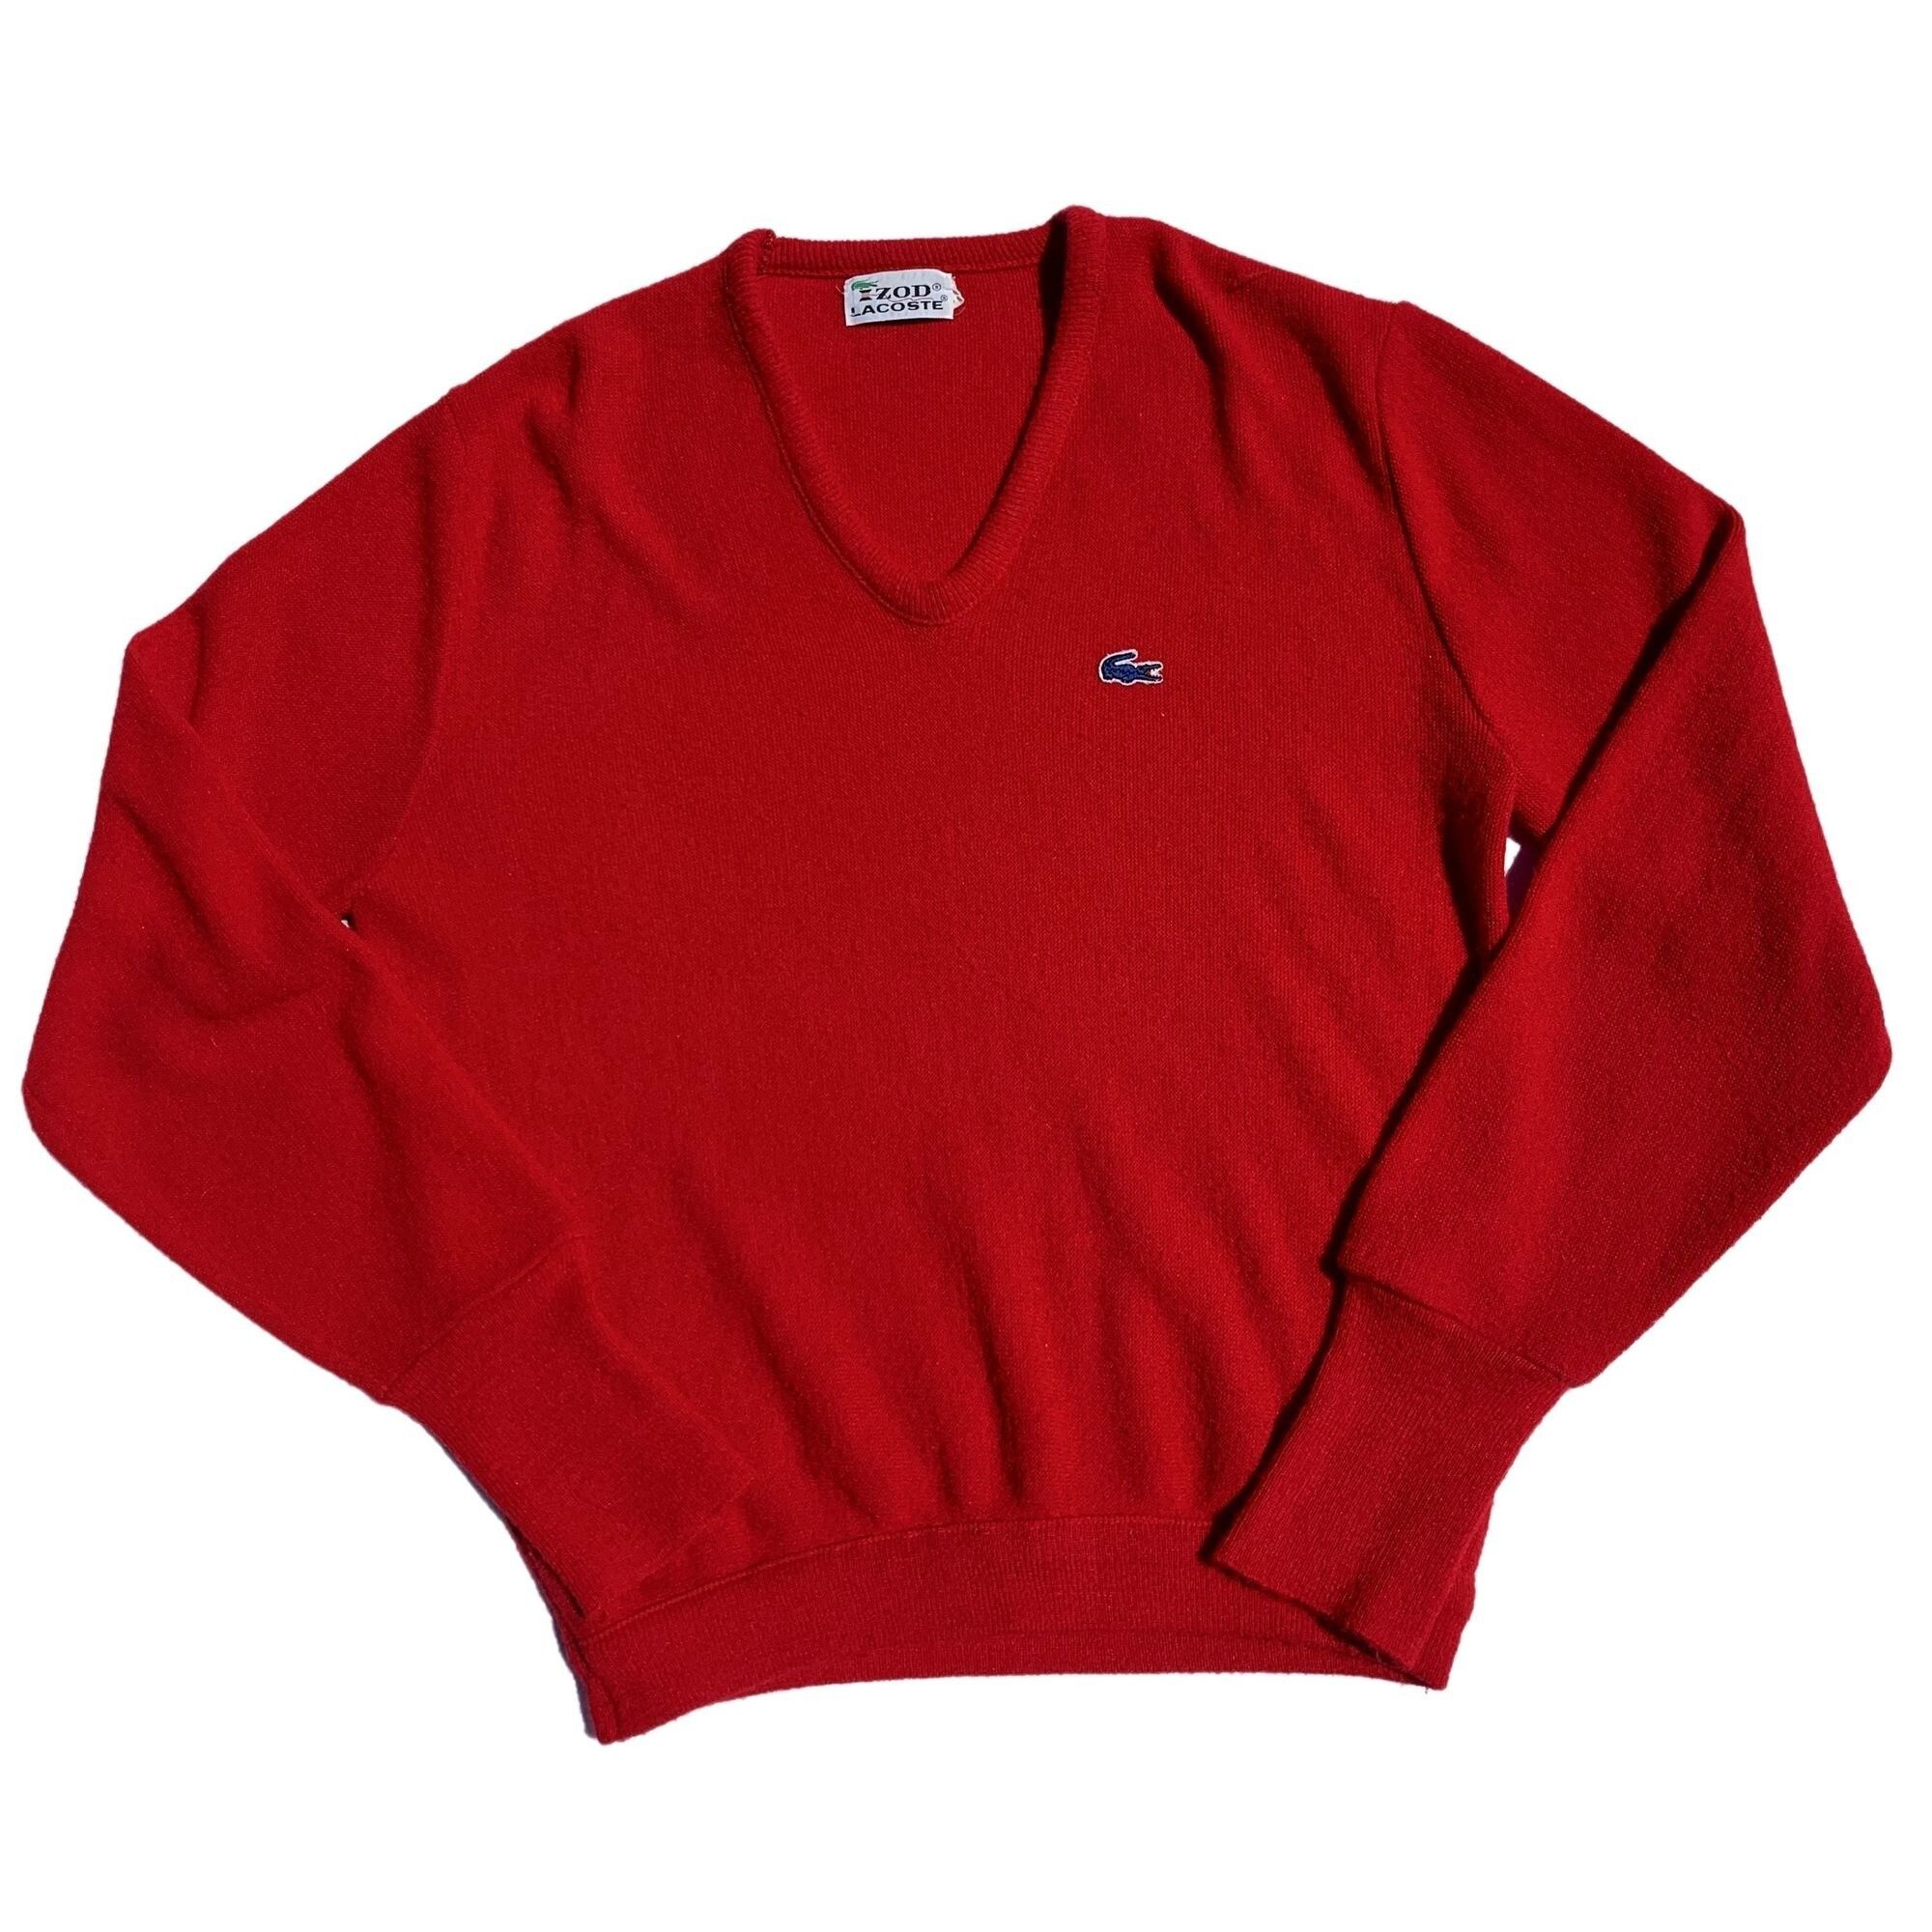 Vintage Lacoste Vintage 1970s Men's Red Pullover Sweater Large Size US L / EU 52-54 / 3 - 1 Preview